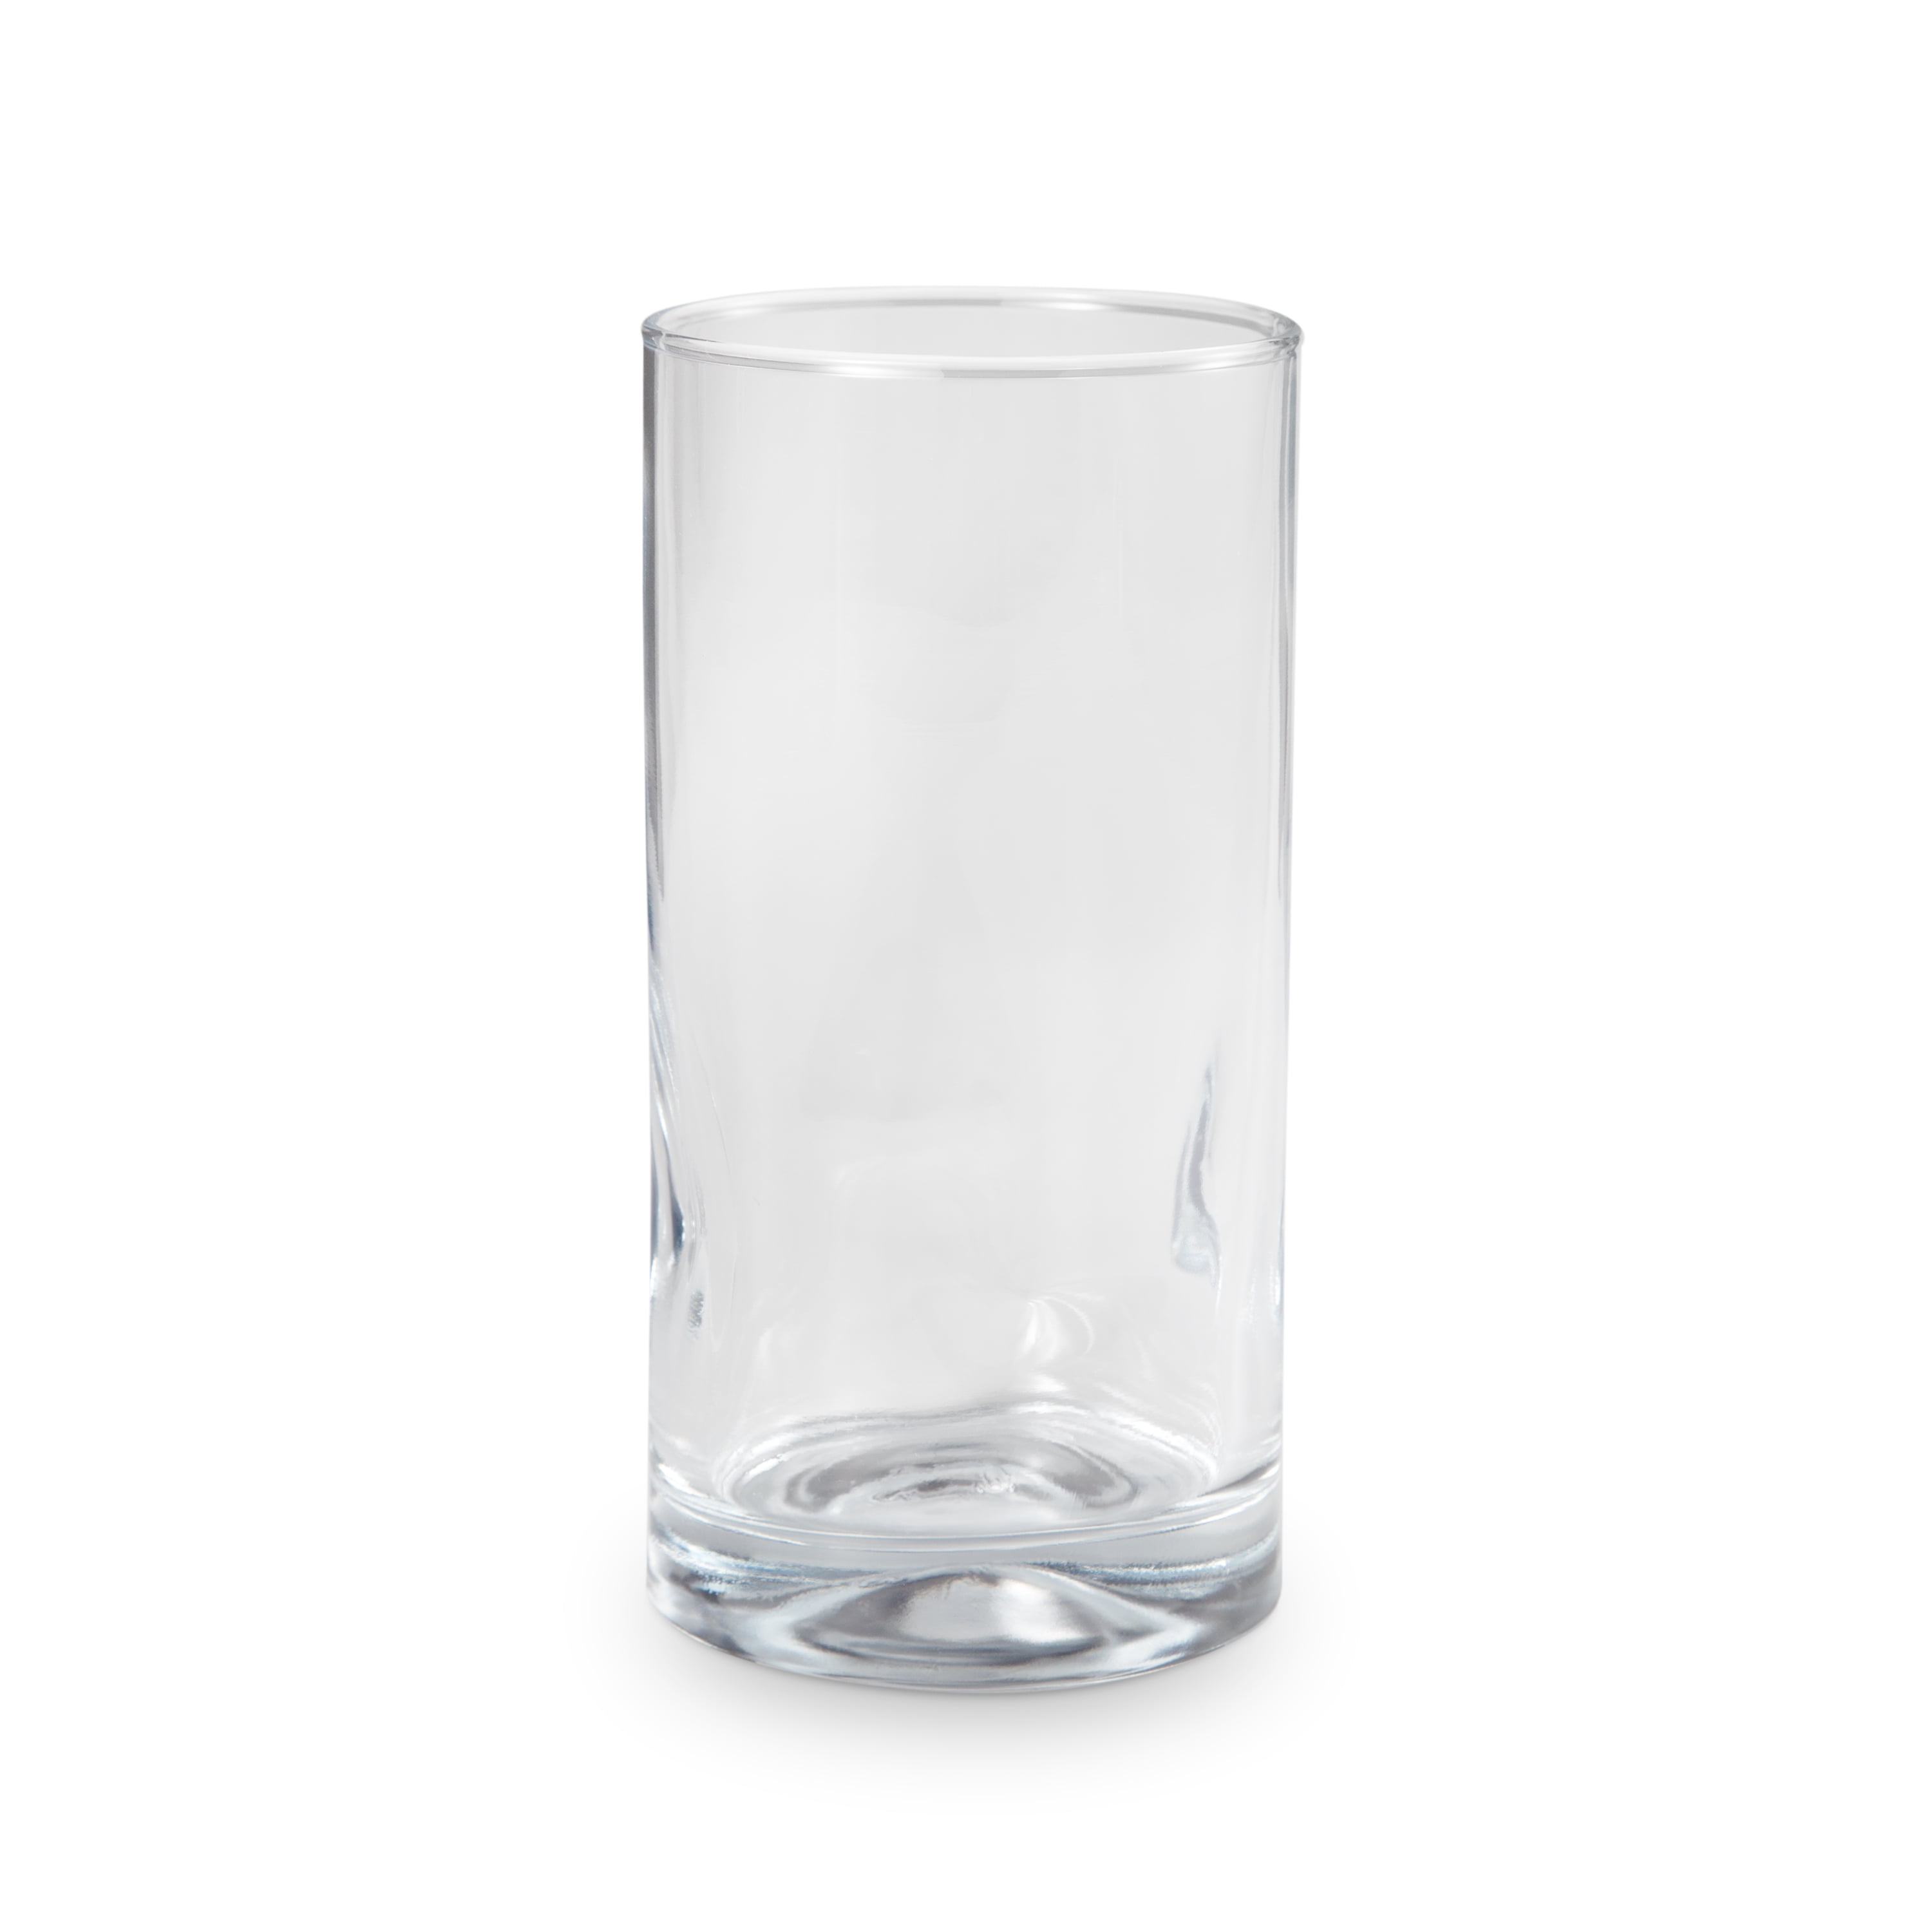 Gift Essentials Glassware Set - Set of 8-Piece Tumbler and Rocks Glass Set - Includes 4 Cooler Glasses (17oz) and 4 Rocks Glasses (13oz), - for Mixed